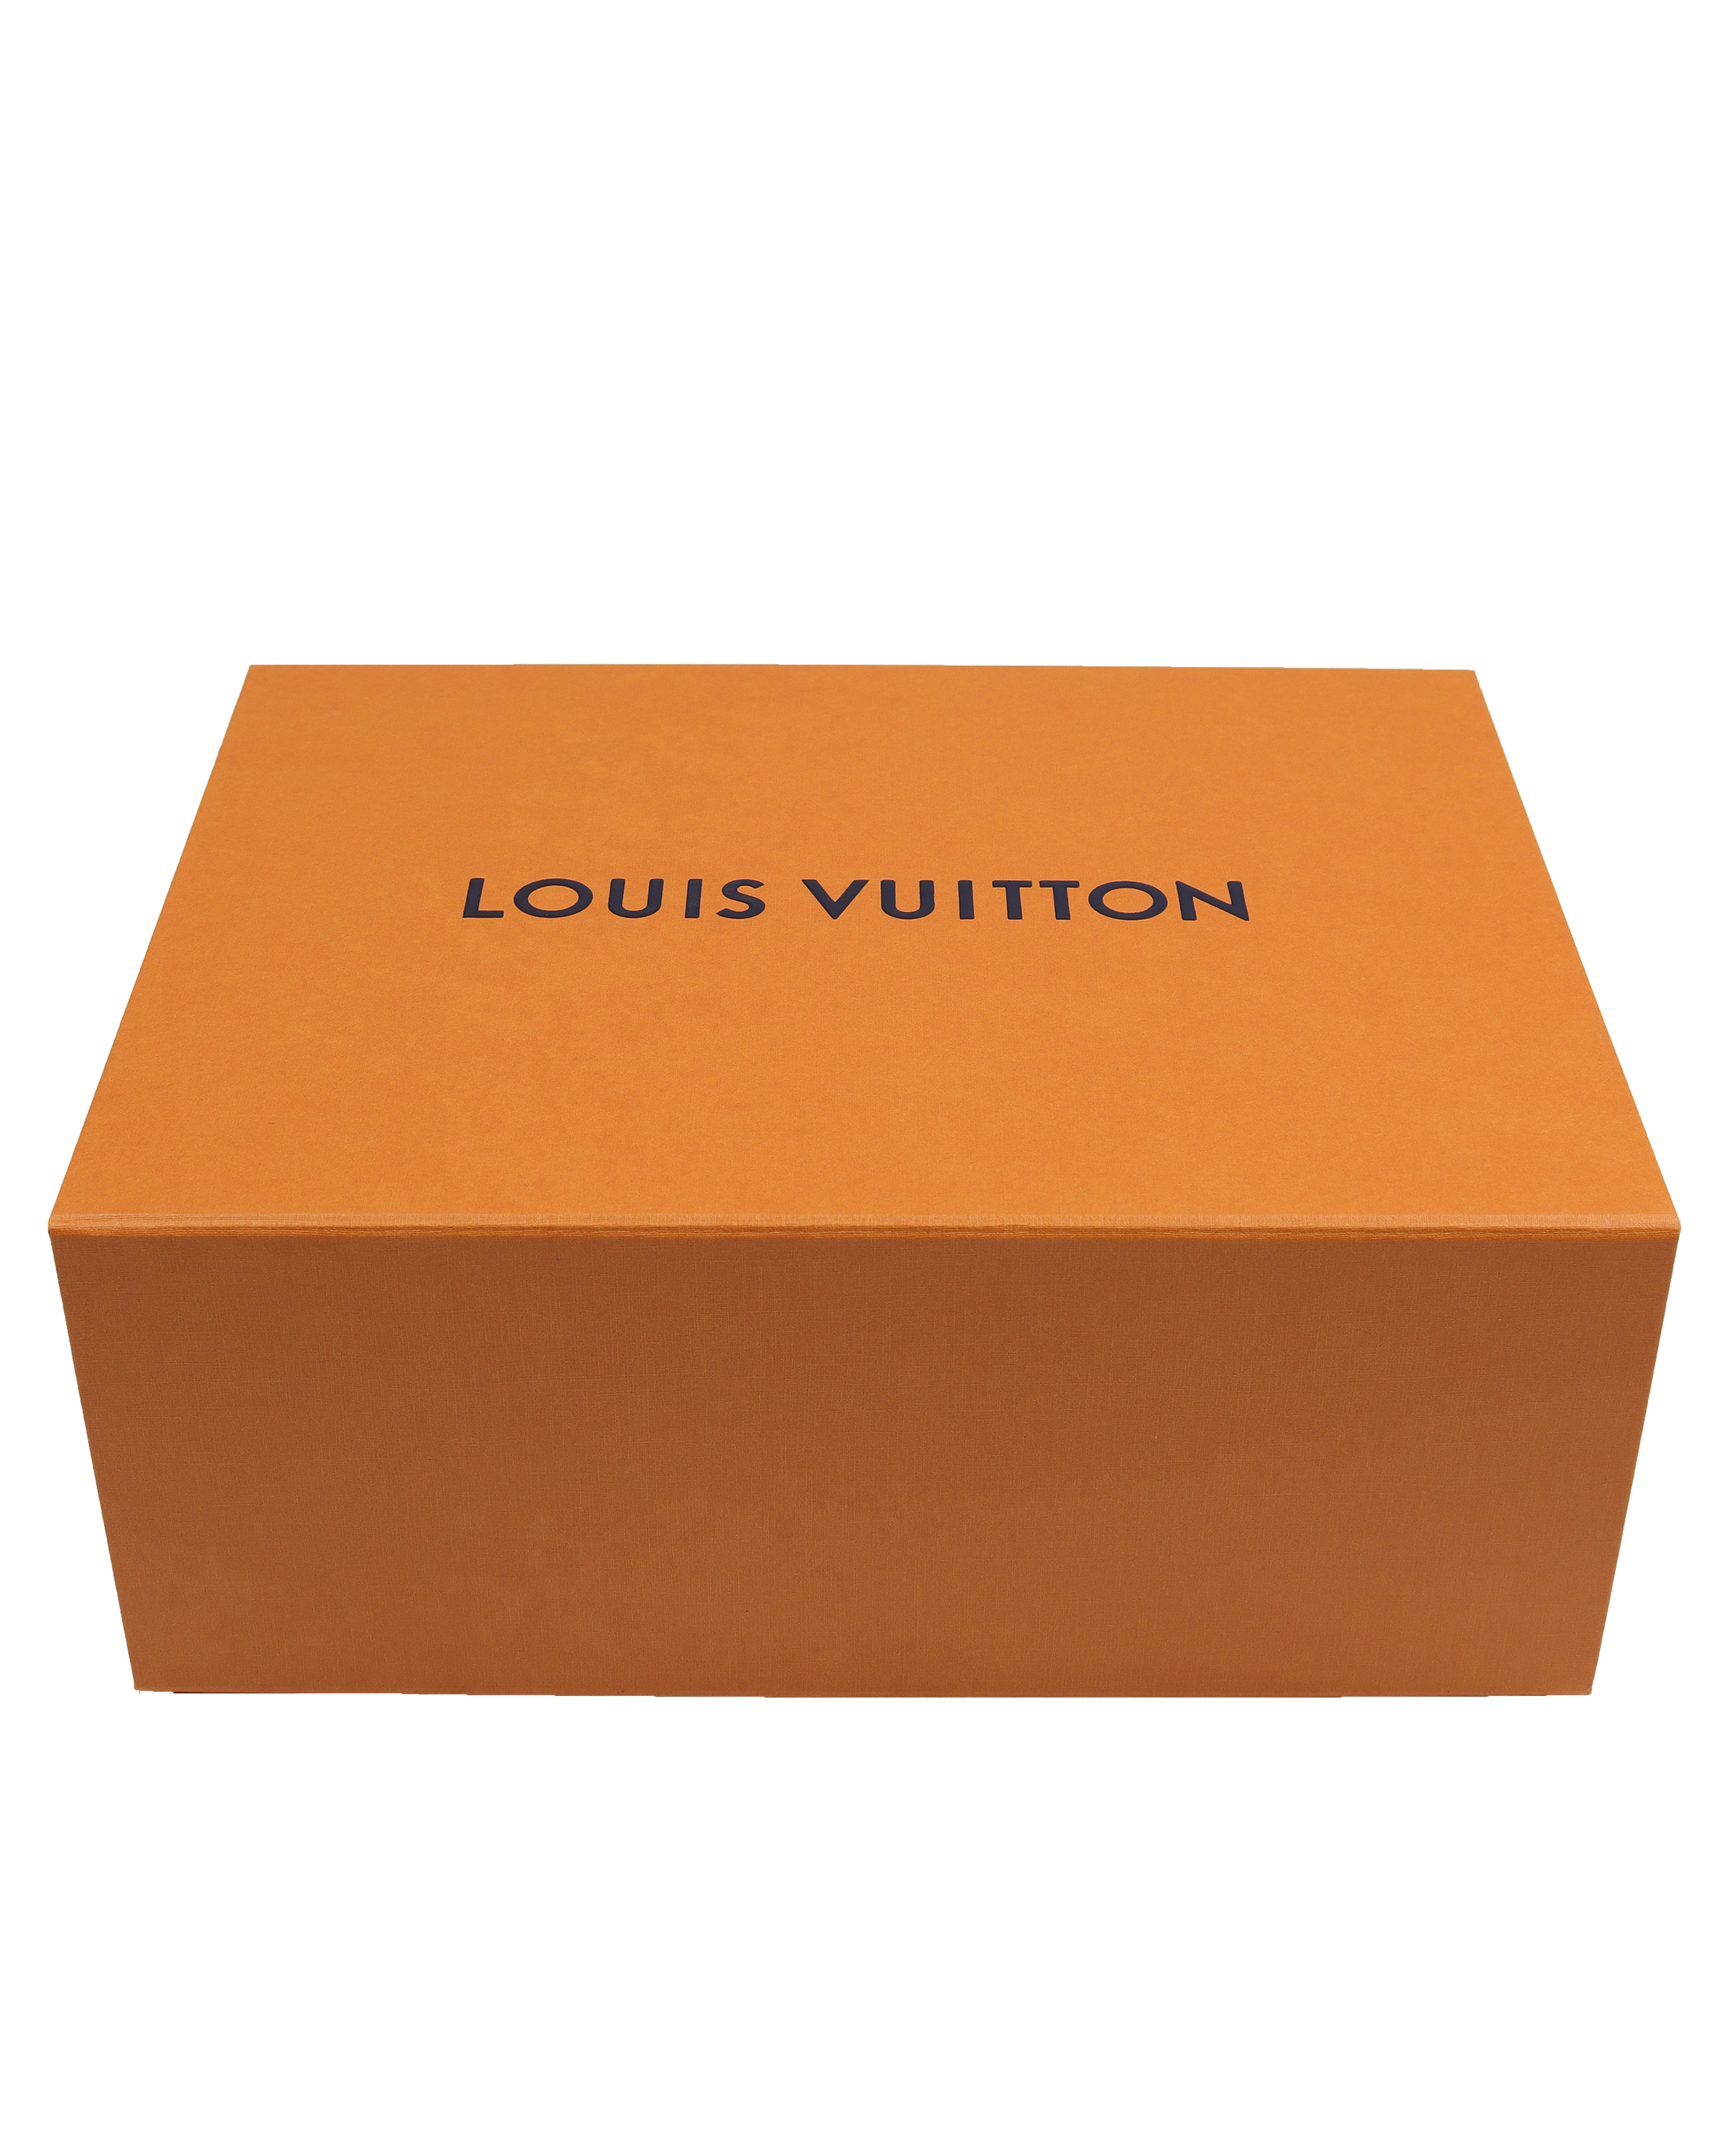 Louis Vuitton Pop Up in soho New York City ✨💎